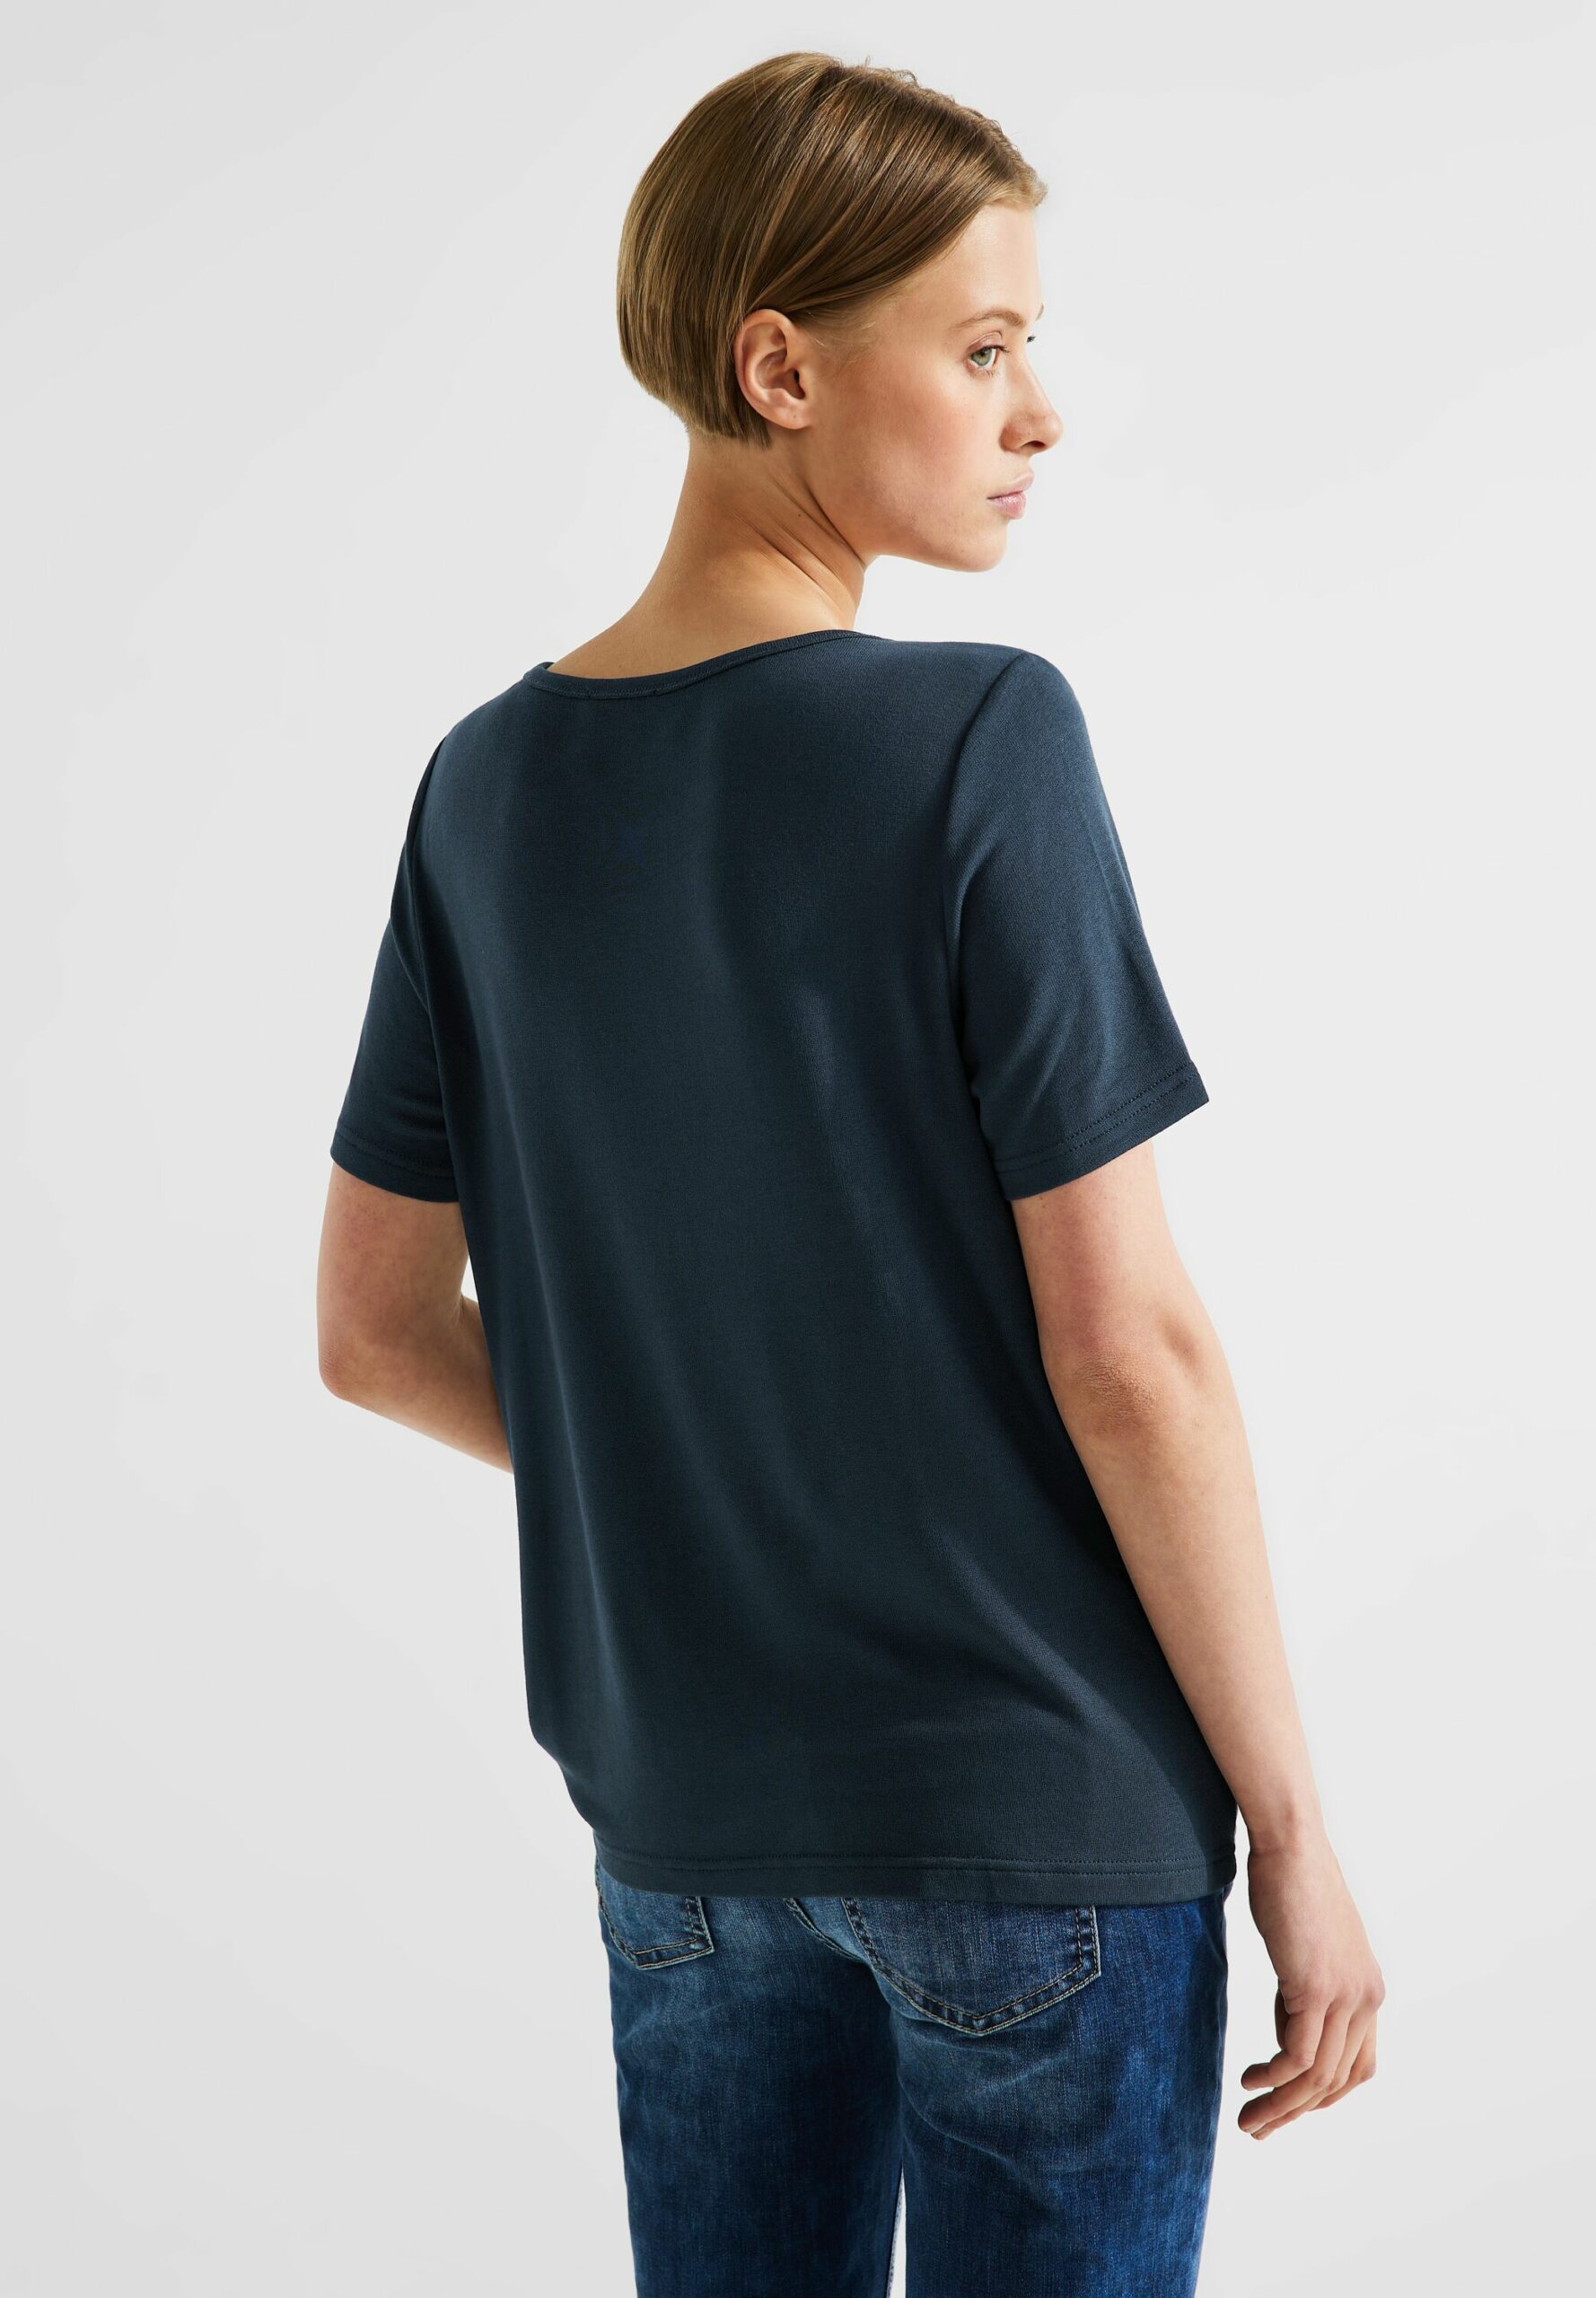 Damen Webshop Modehaus One - Street Kamlage T-Shirt